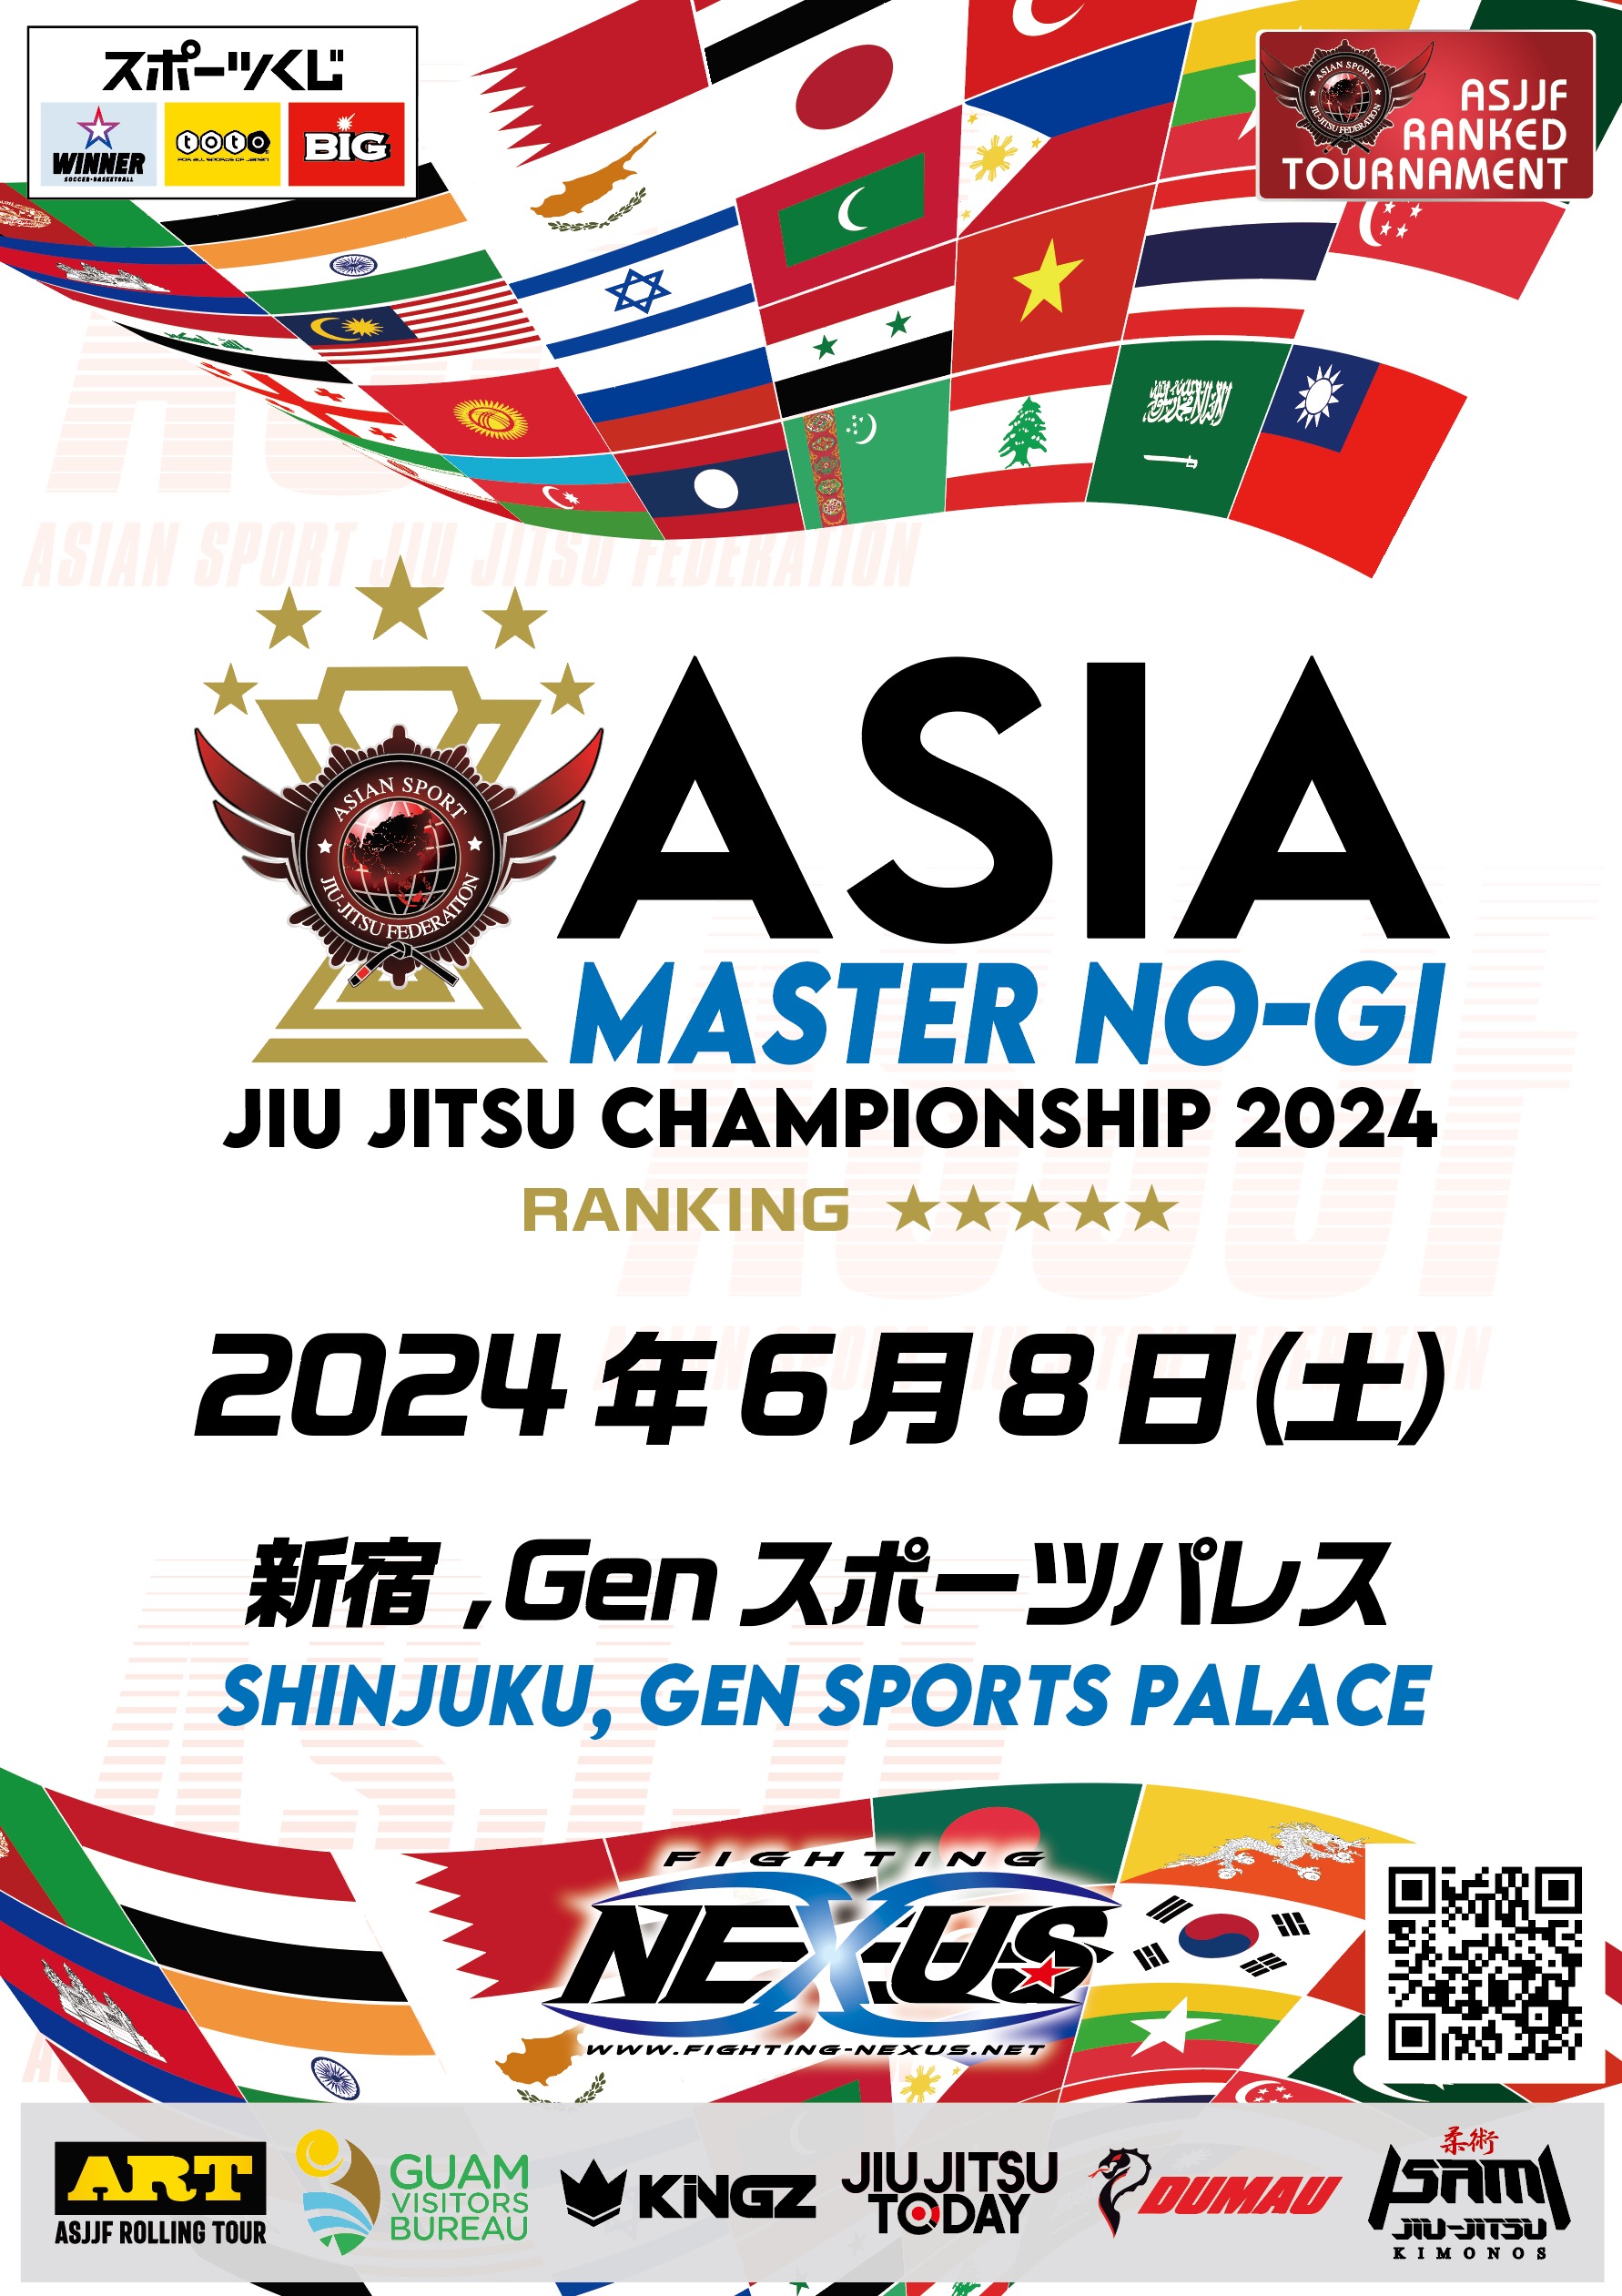 asia masters no-gi championship 2024